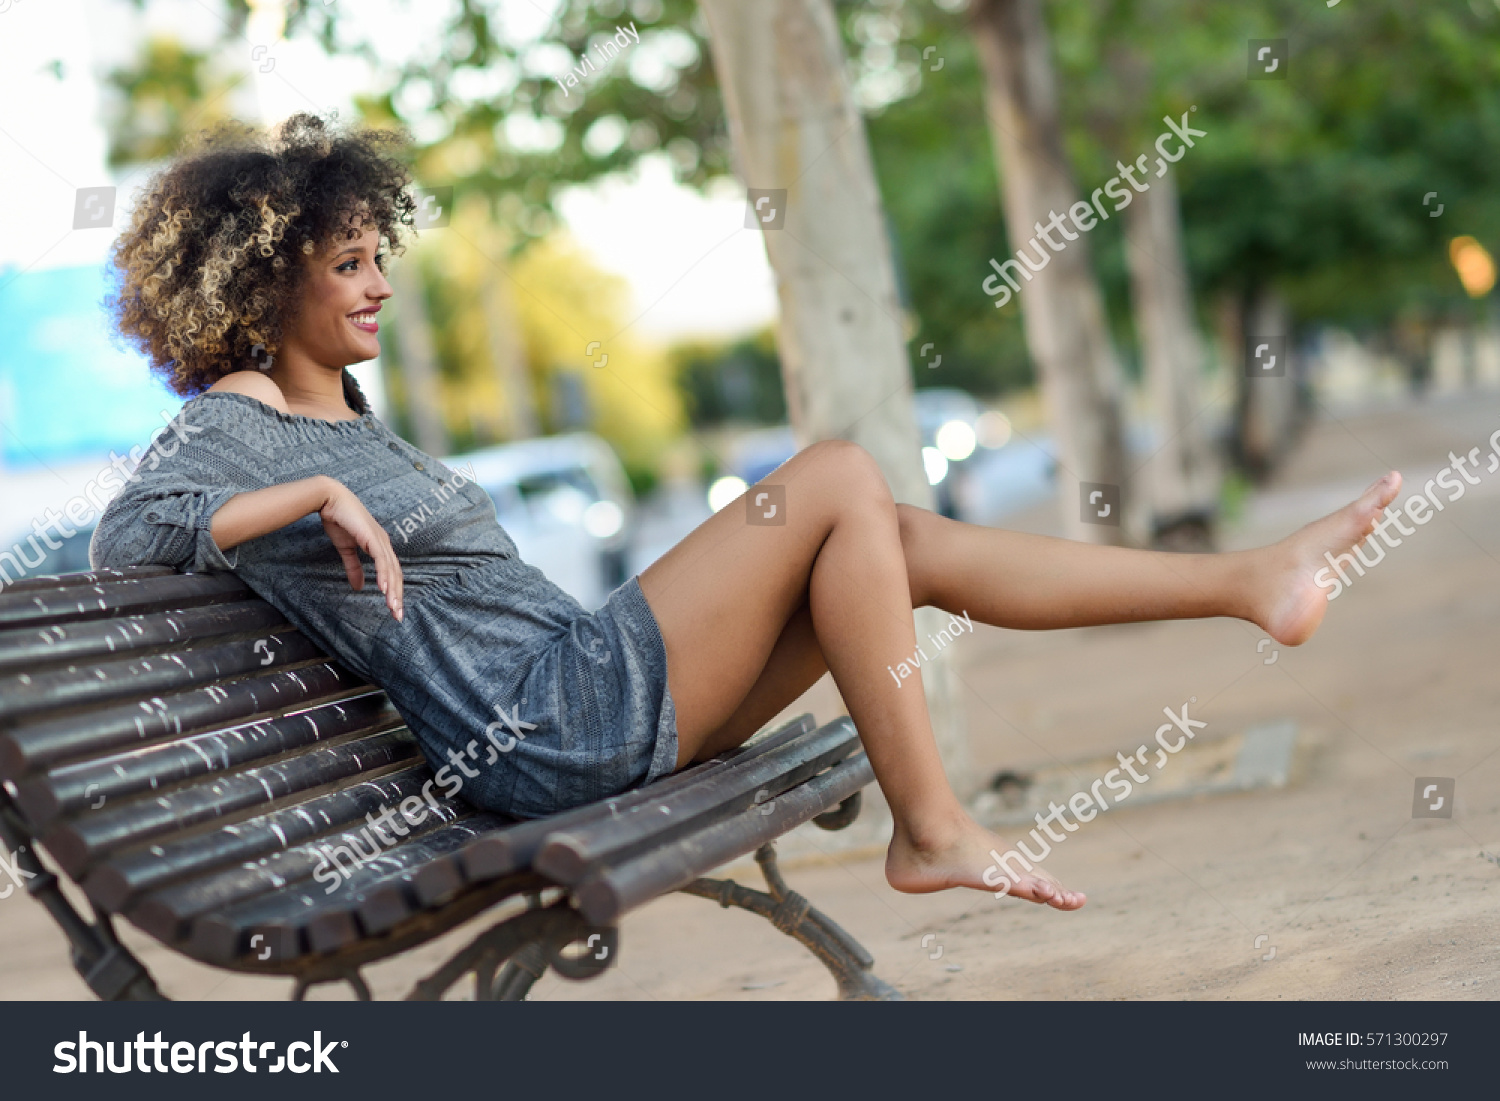 27 111 Imágenes De Barefoot Black Women Imágenes Fotos Y Vectores De Stock Shutterstock